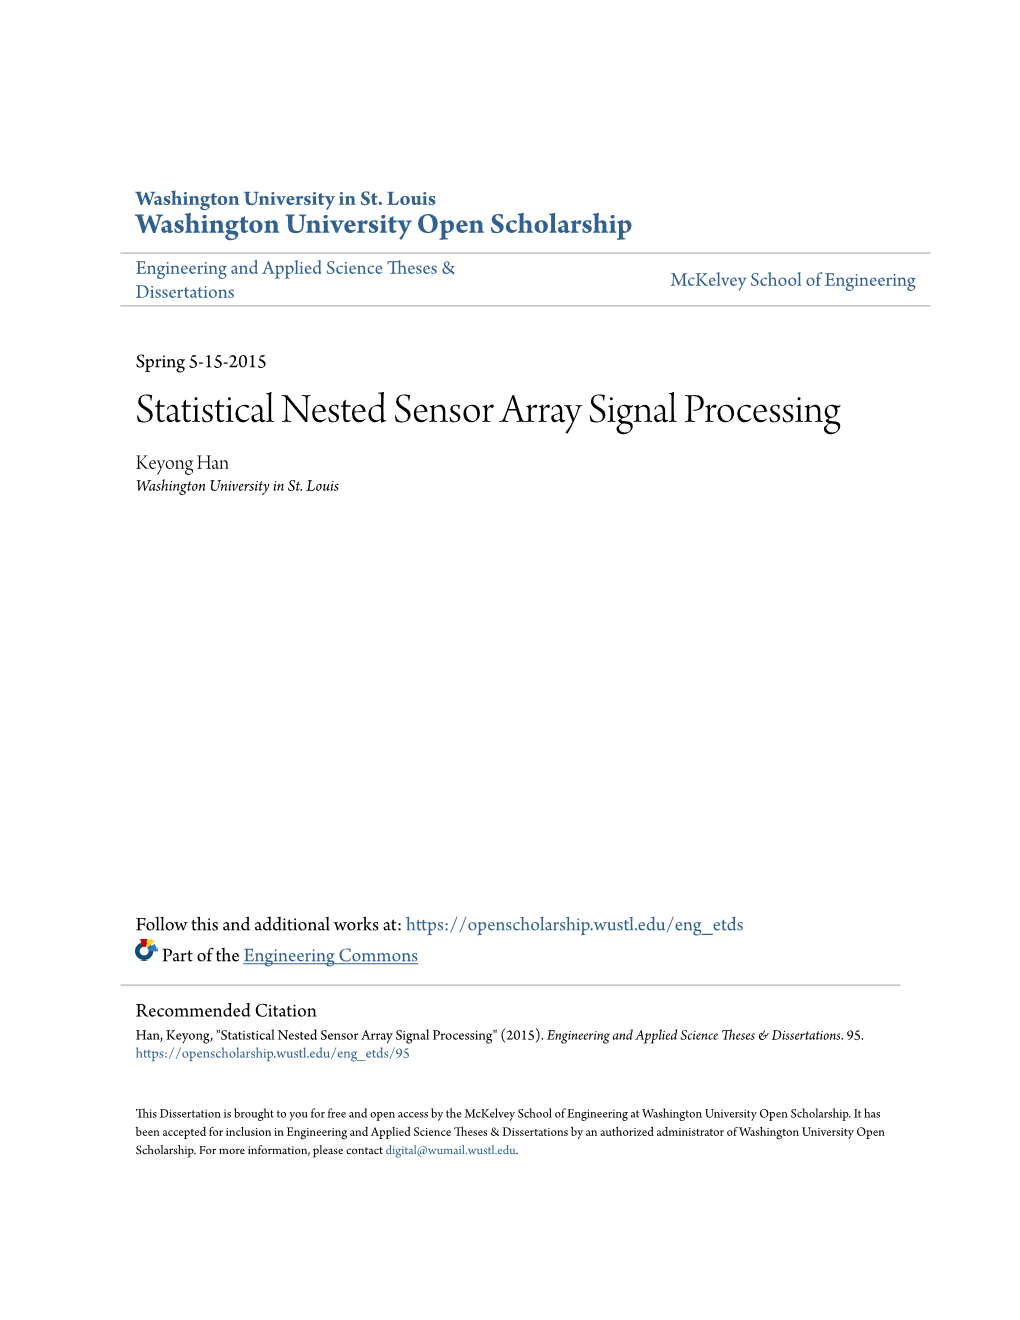 Statistical Nested Sensor Array Signal Processing Keyong Han Washington University in St